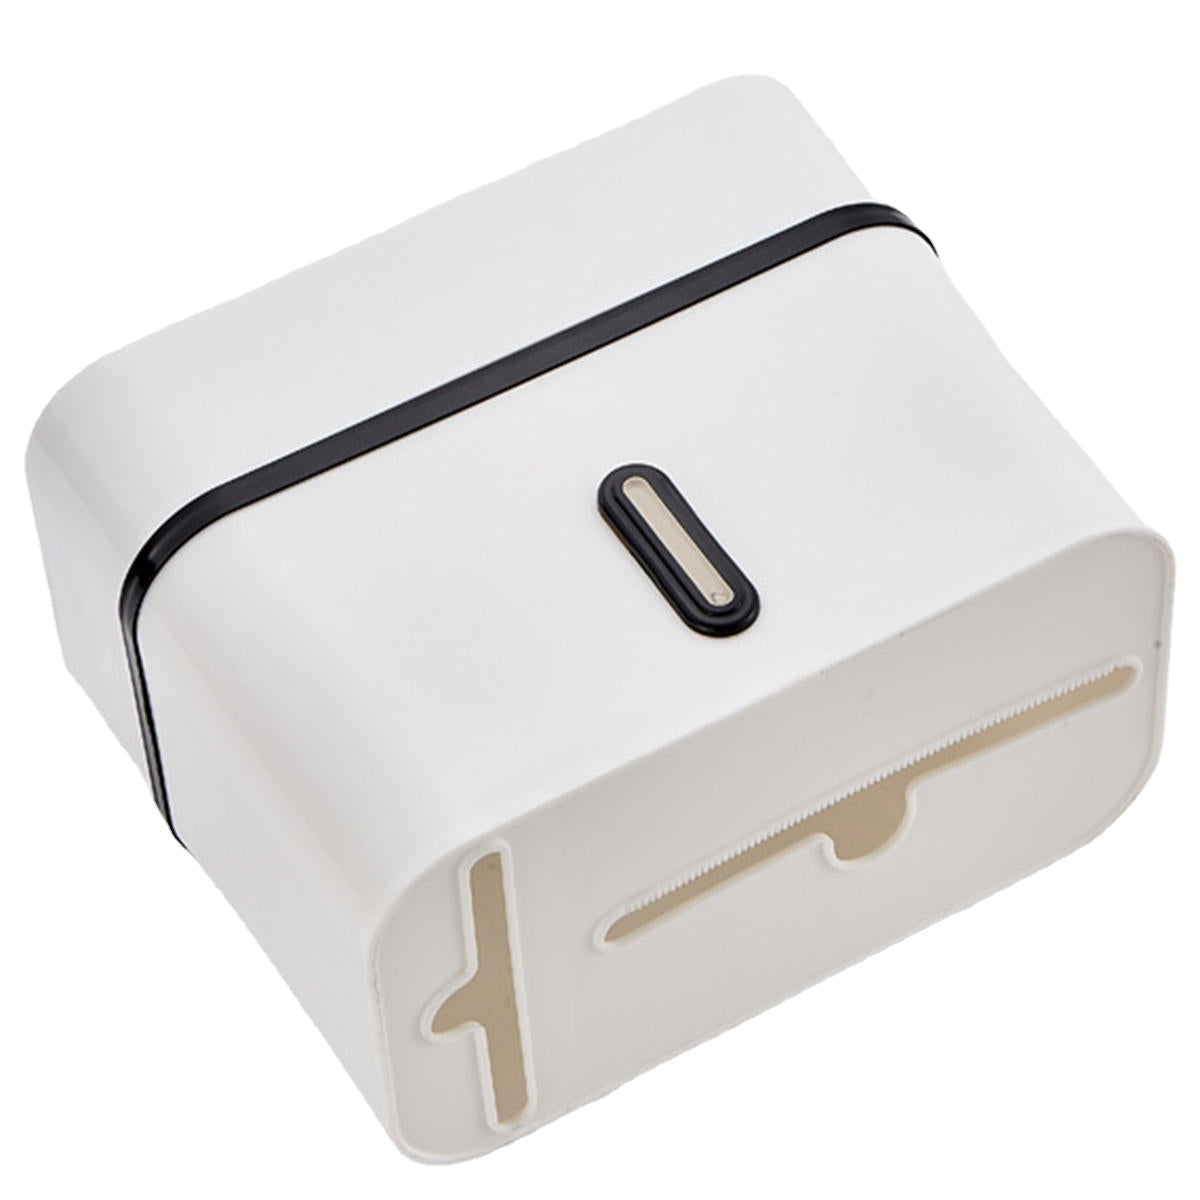 Bathroom Tissue Hand Paper Dispenser Holder Wall Mounted Tissue Box Not Drill